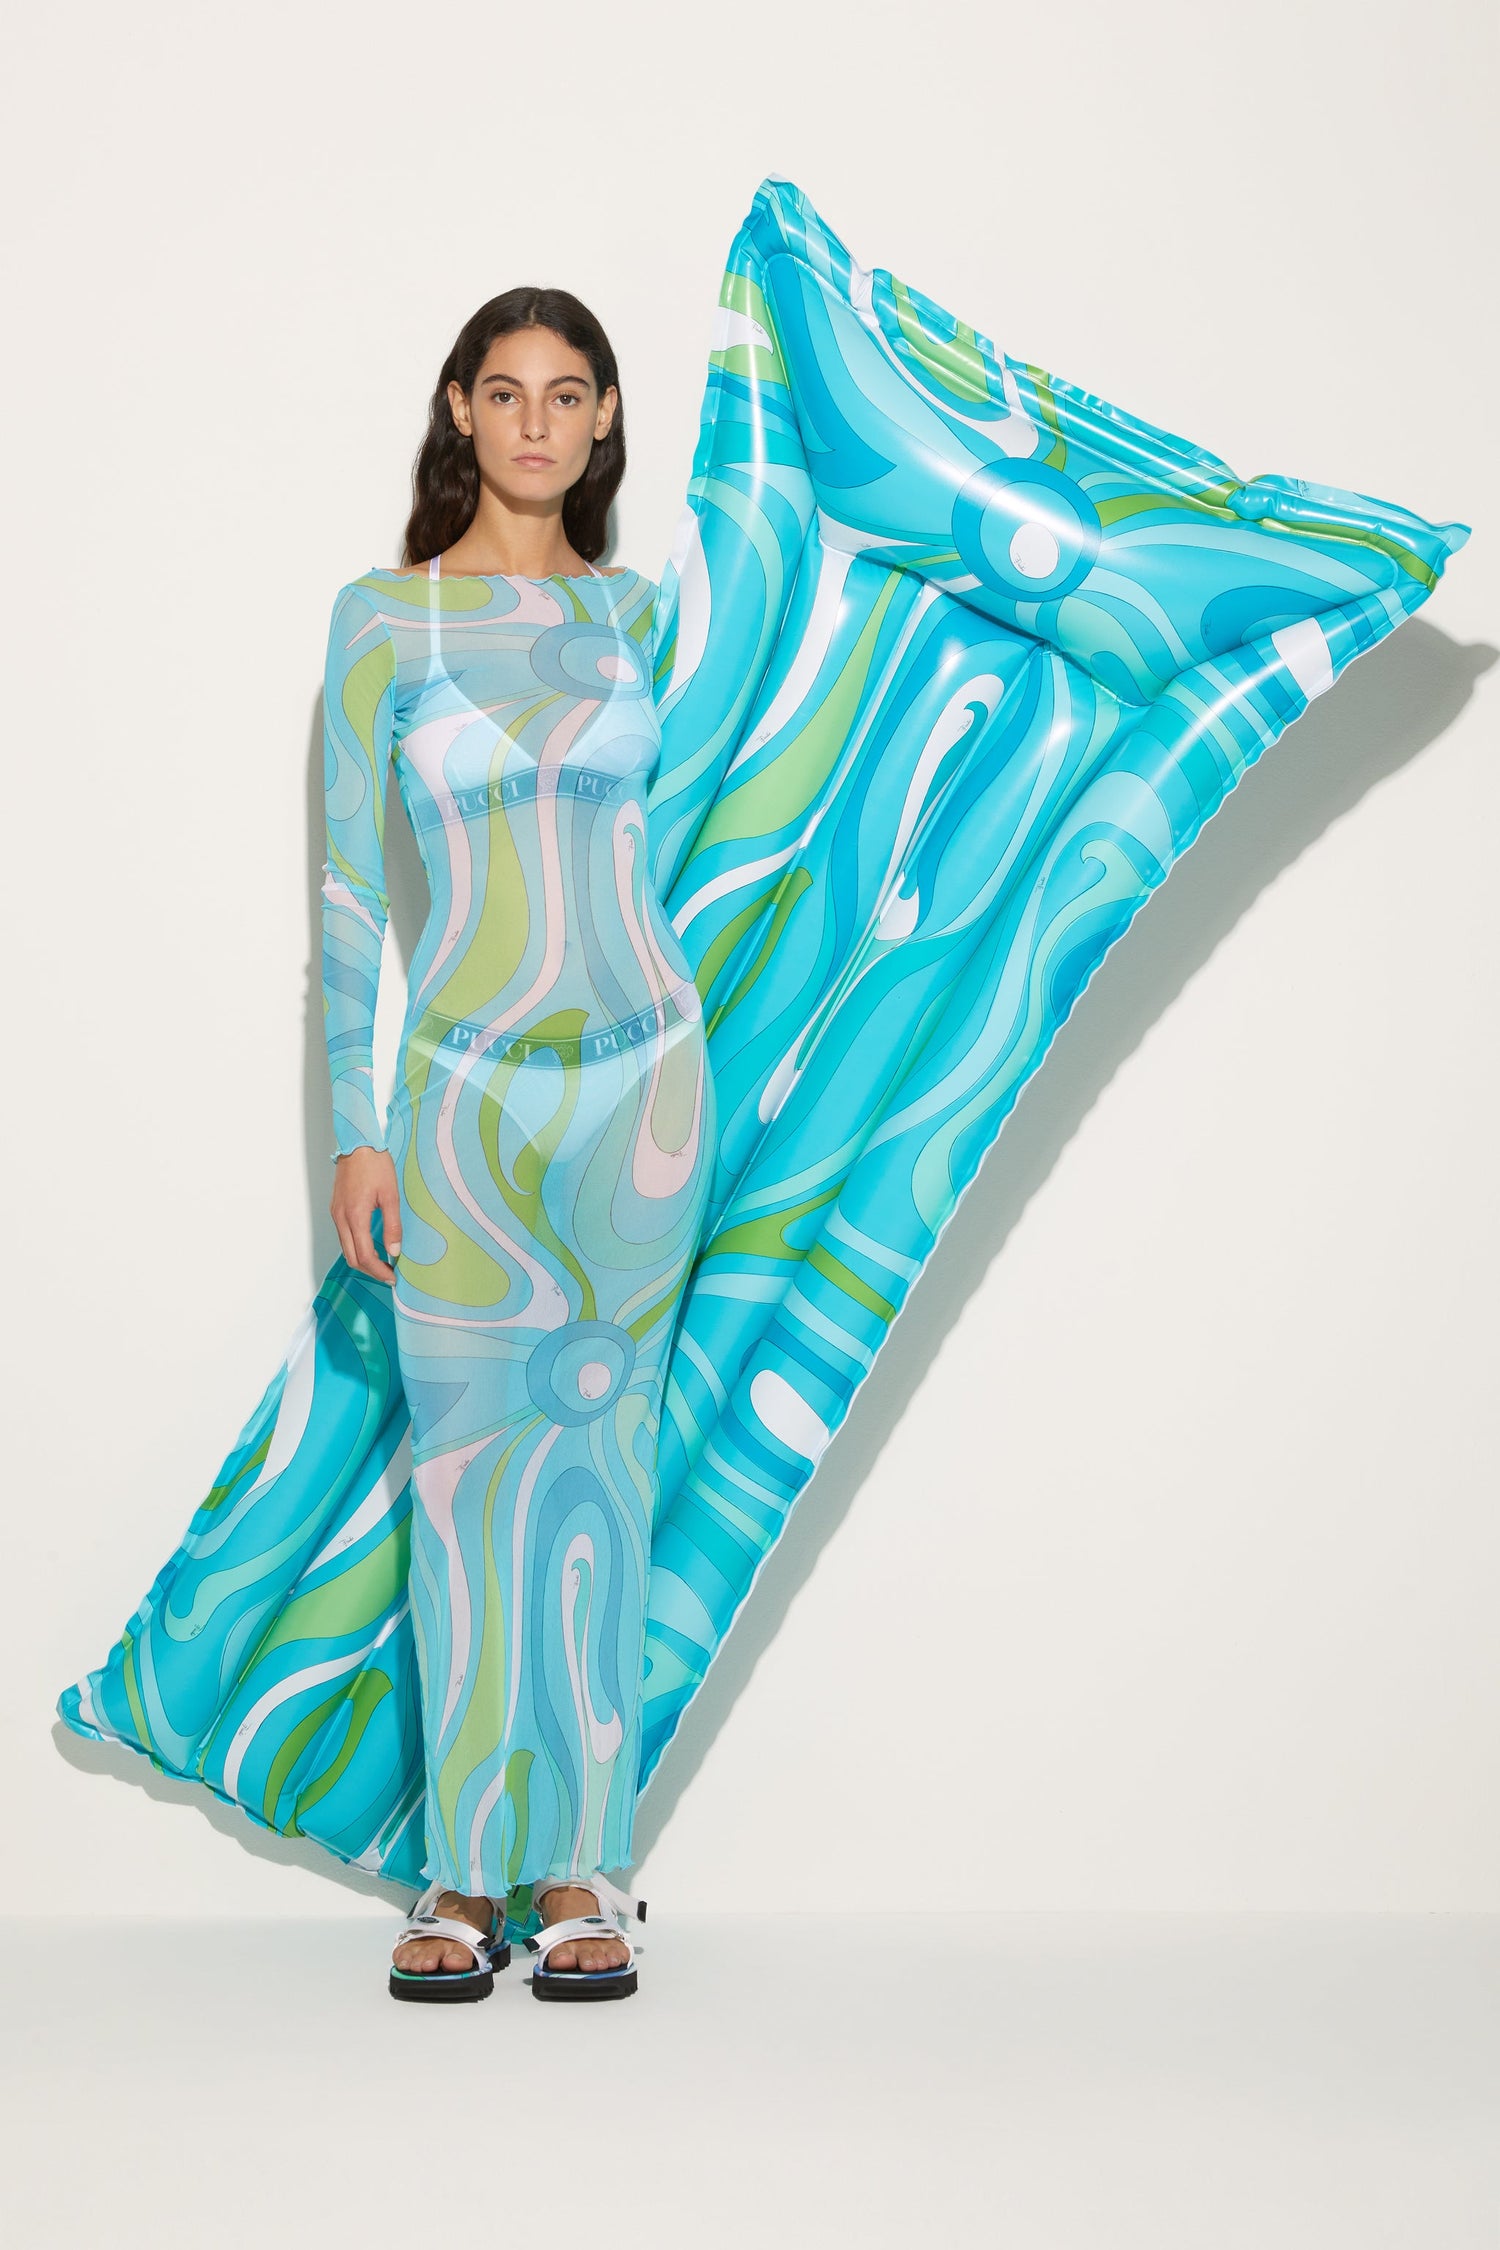 Marmo-Print Inflatable Lilo